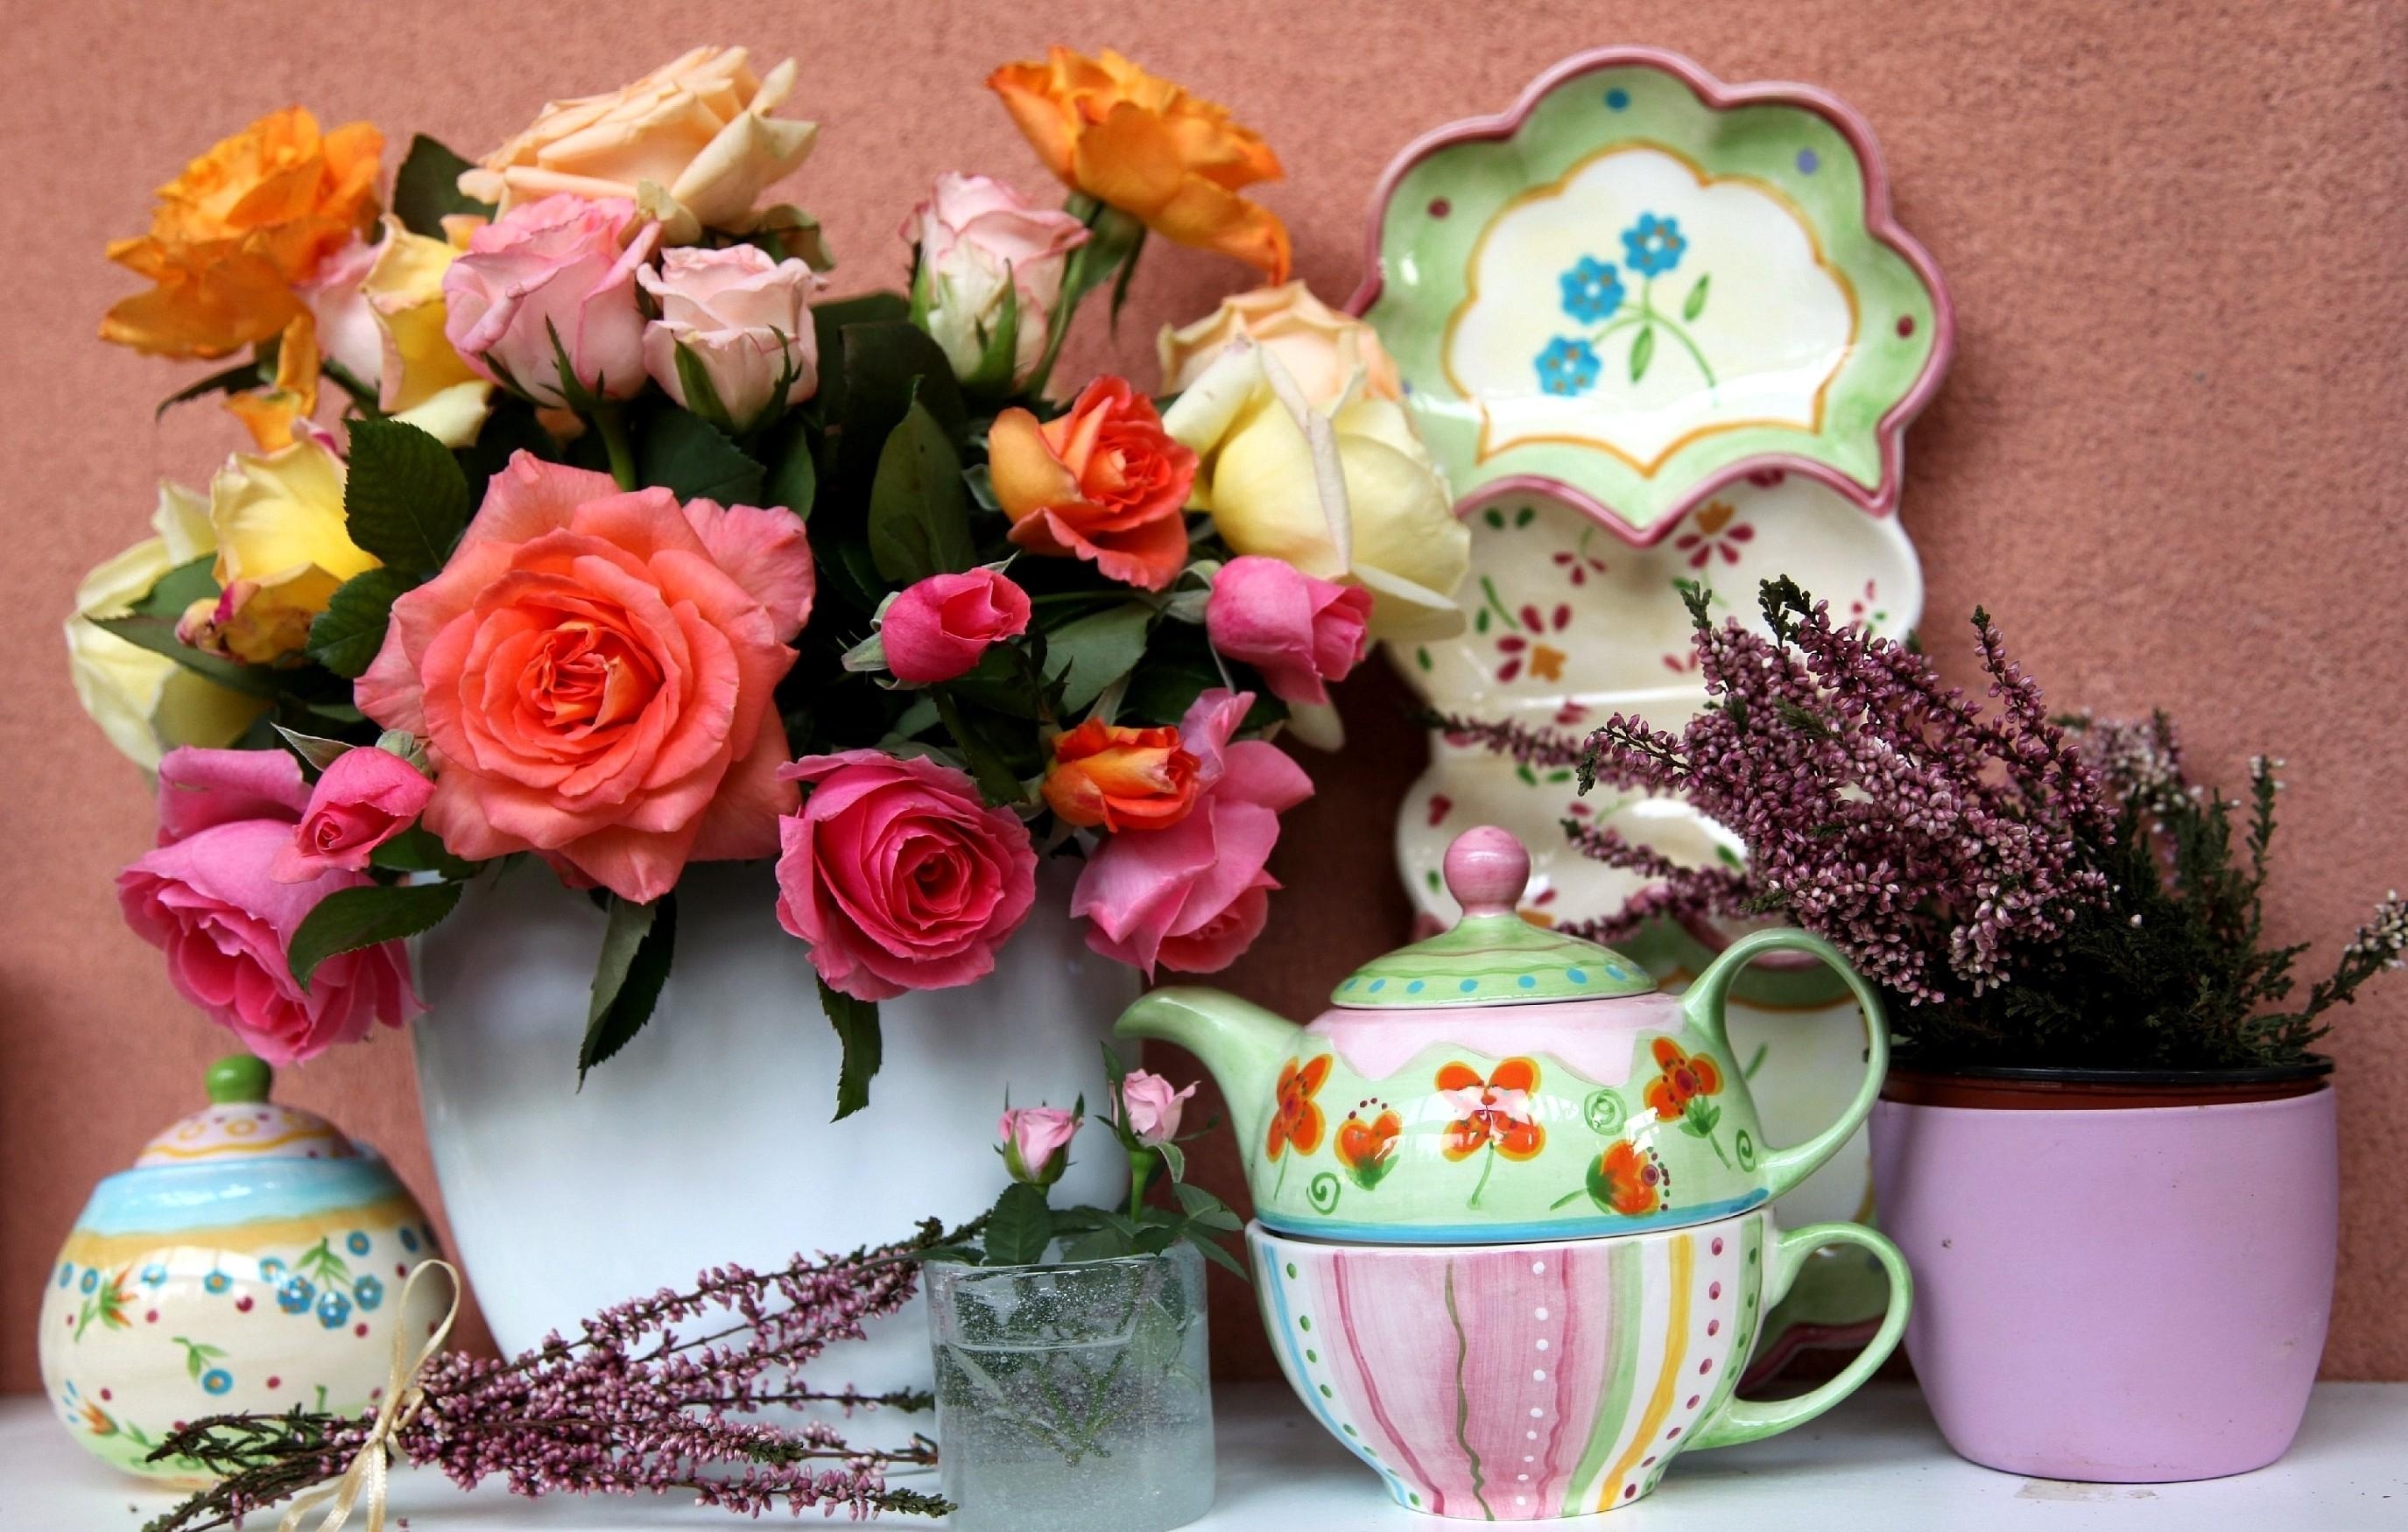 flowers, roses, tablewares, bouquet, vase, service wallpaper for mobile